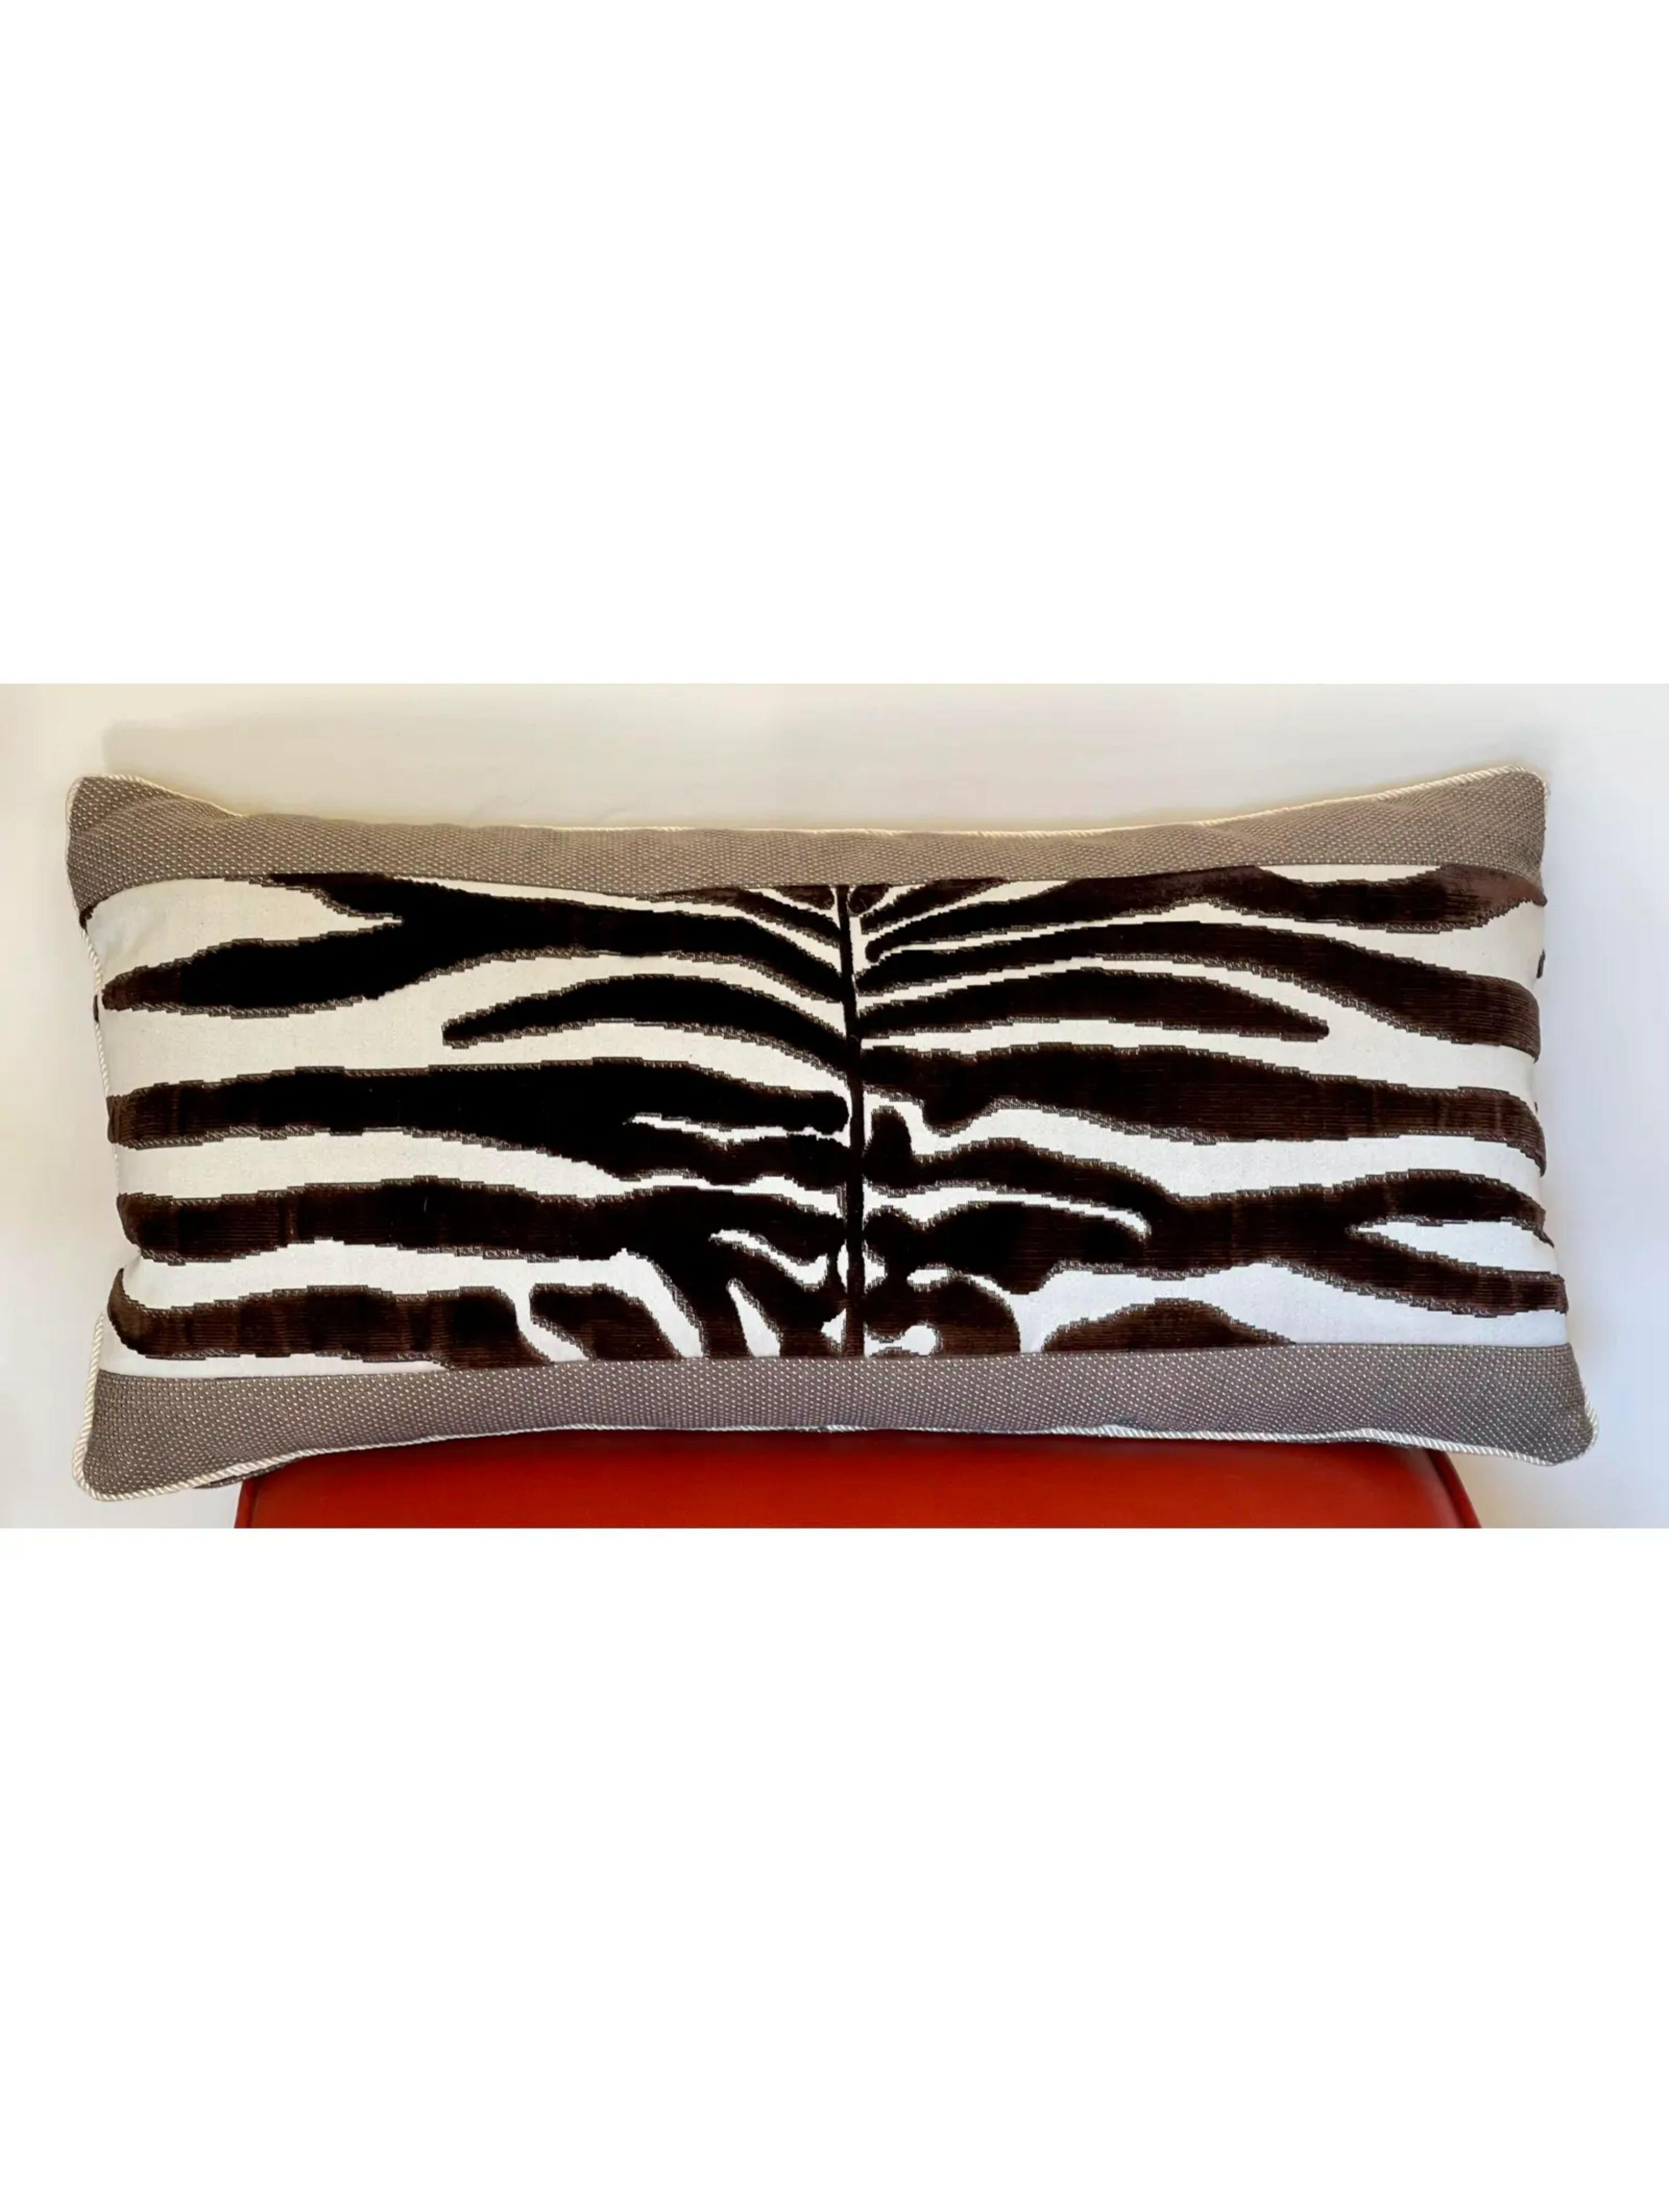 Contemporary Scalamandre Silk Cut Velvet Zebra Down Filled Designer Pillow, 2010s